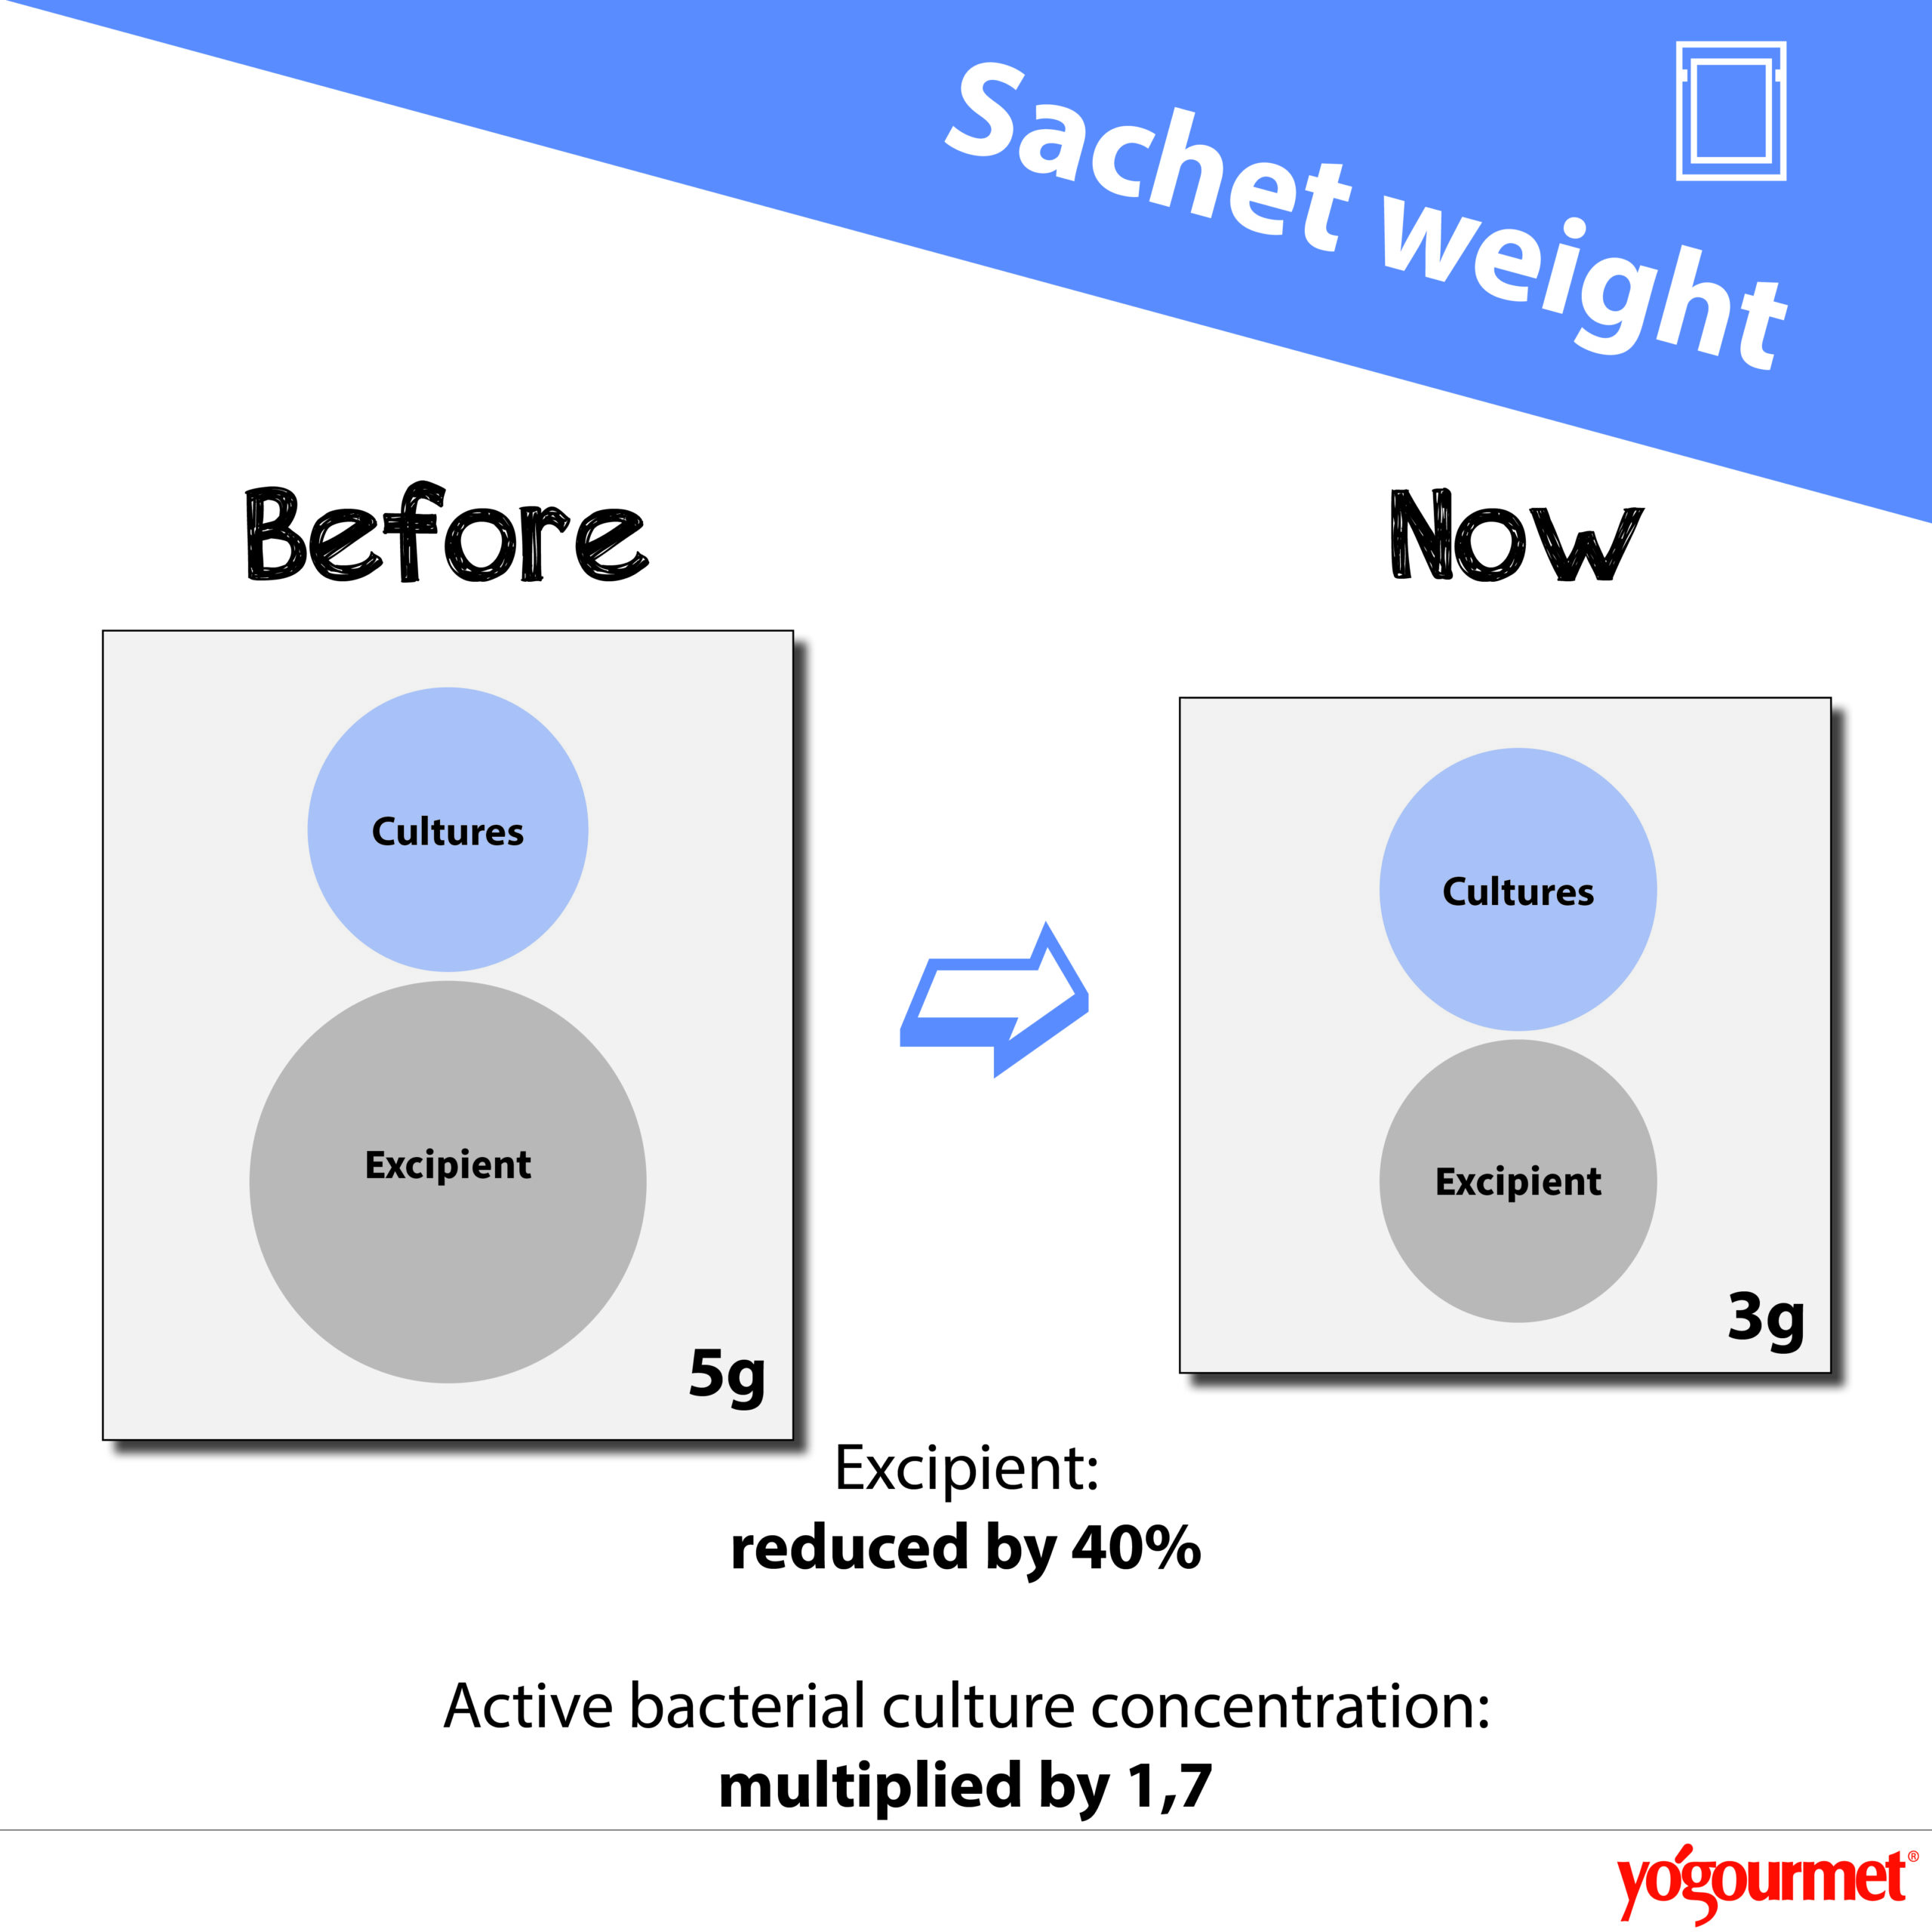 Sachet weight